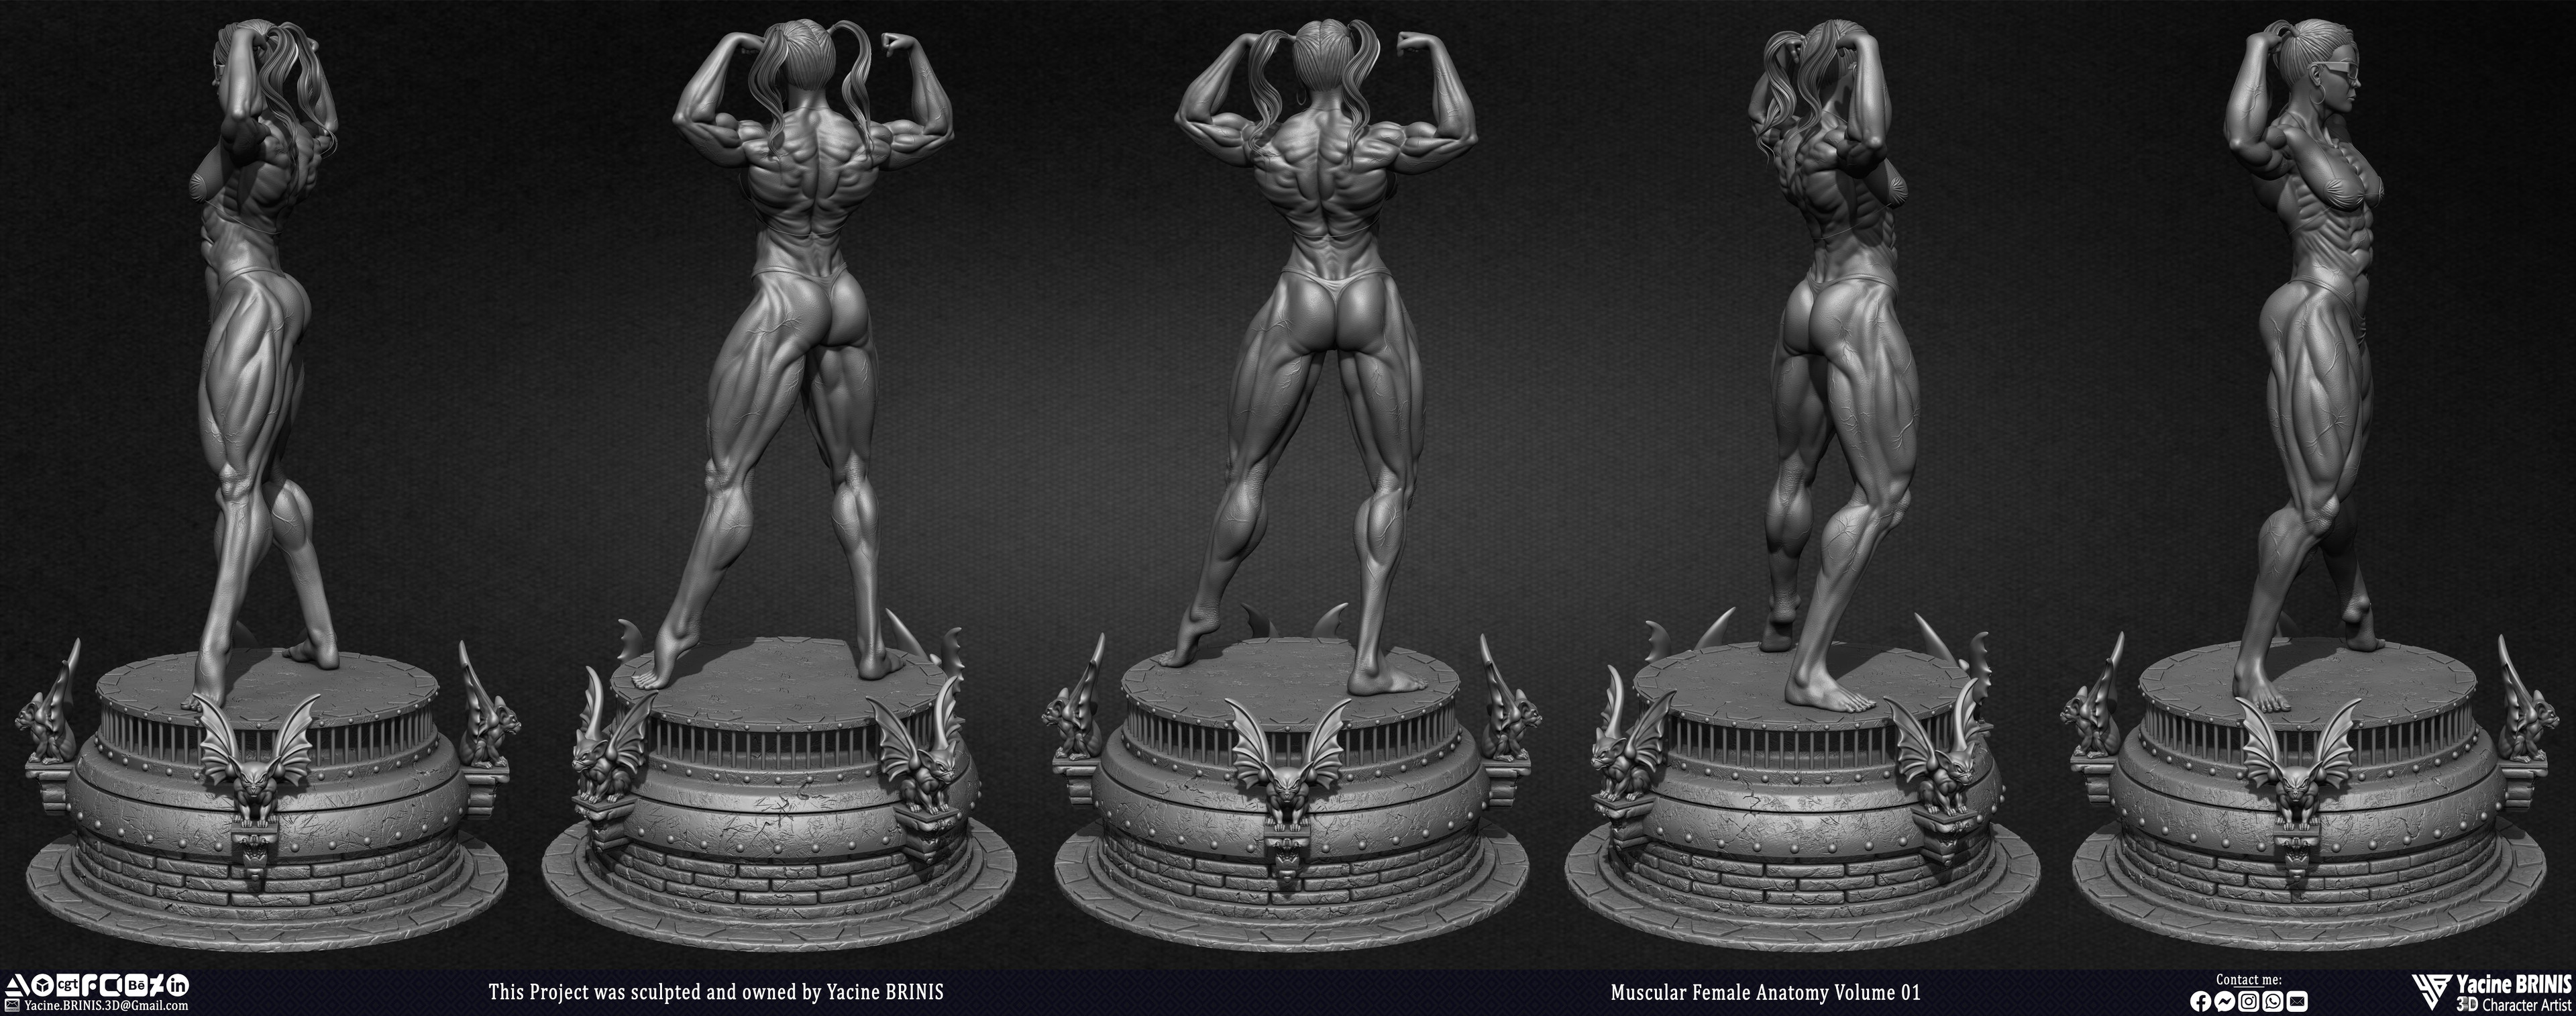 Muscular Female Anatomy Volume 01 sculpted by Yacine BRINIS 003